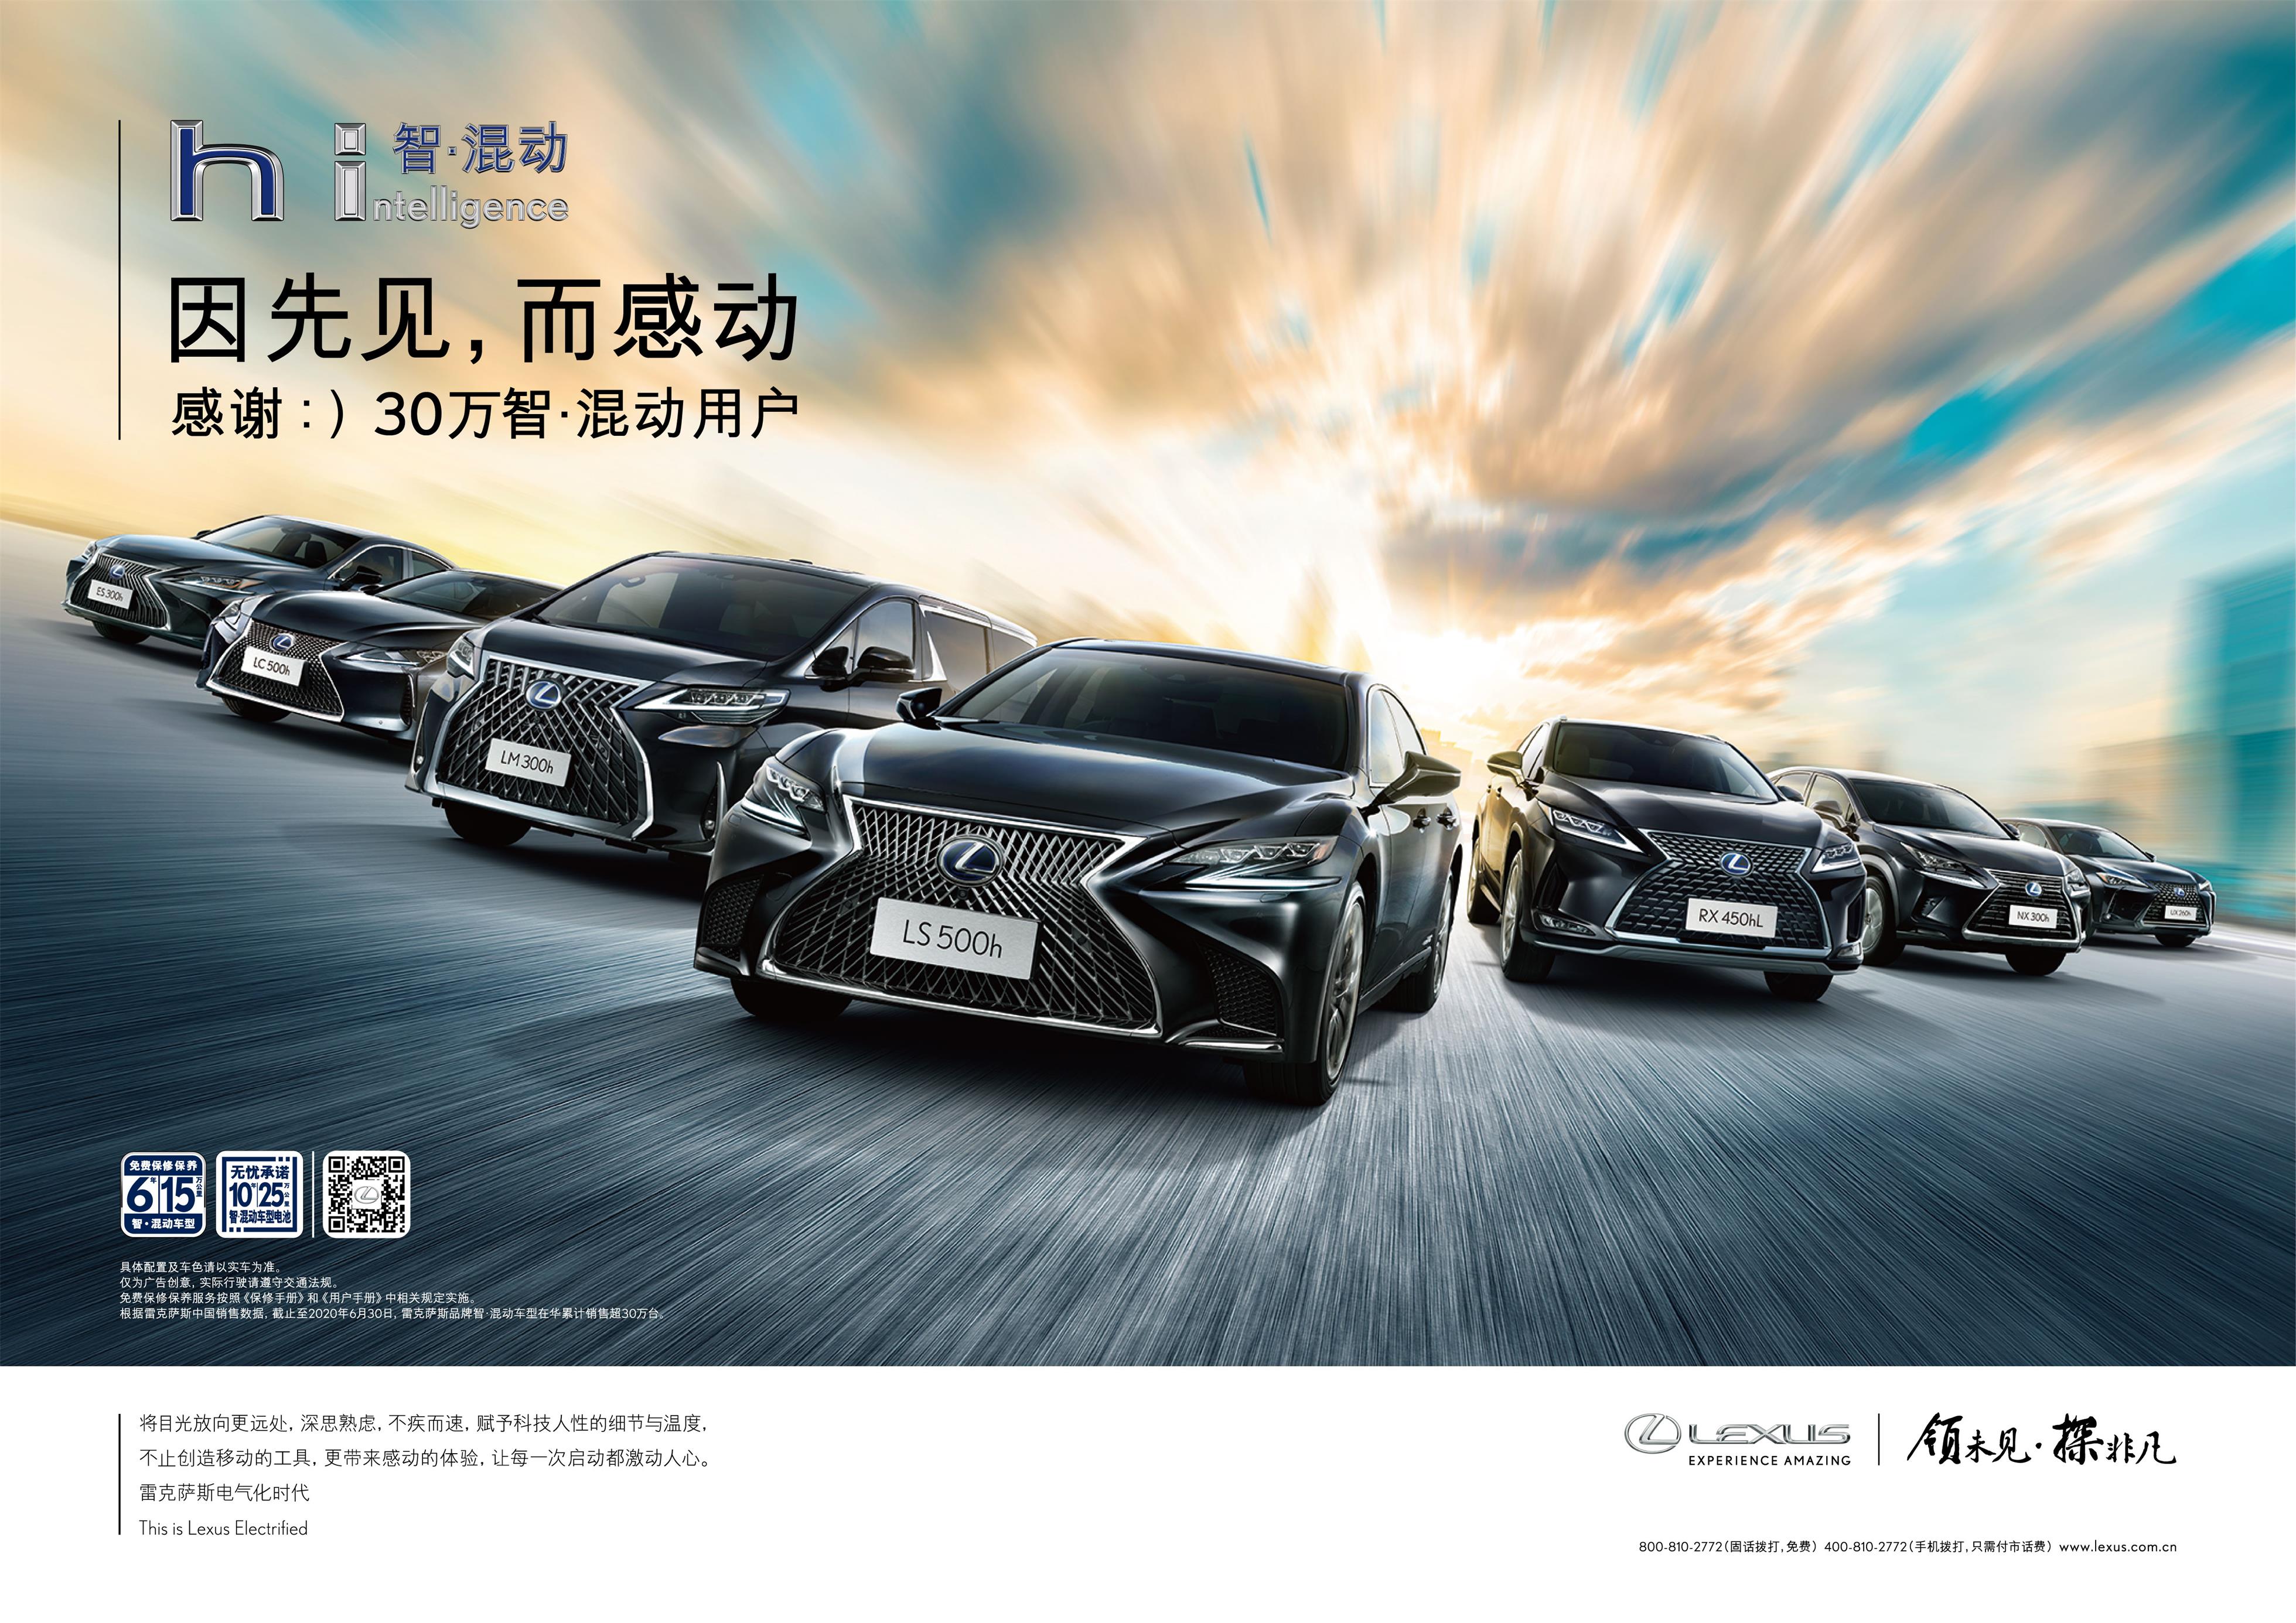 <b>感动，源于先见 LEXUS雷克萨斯智・混动车型在中国大陆市场累计销量达成30万台</b>